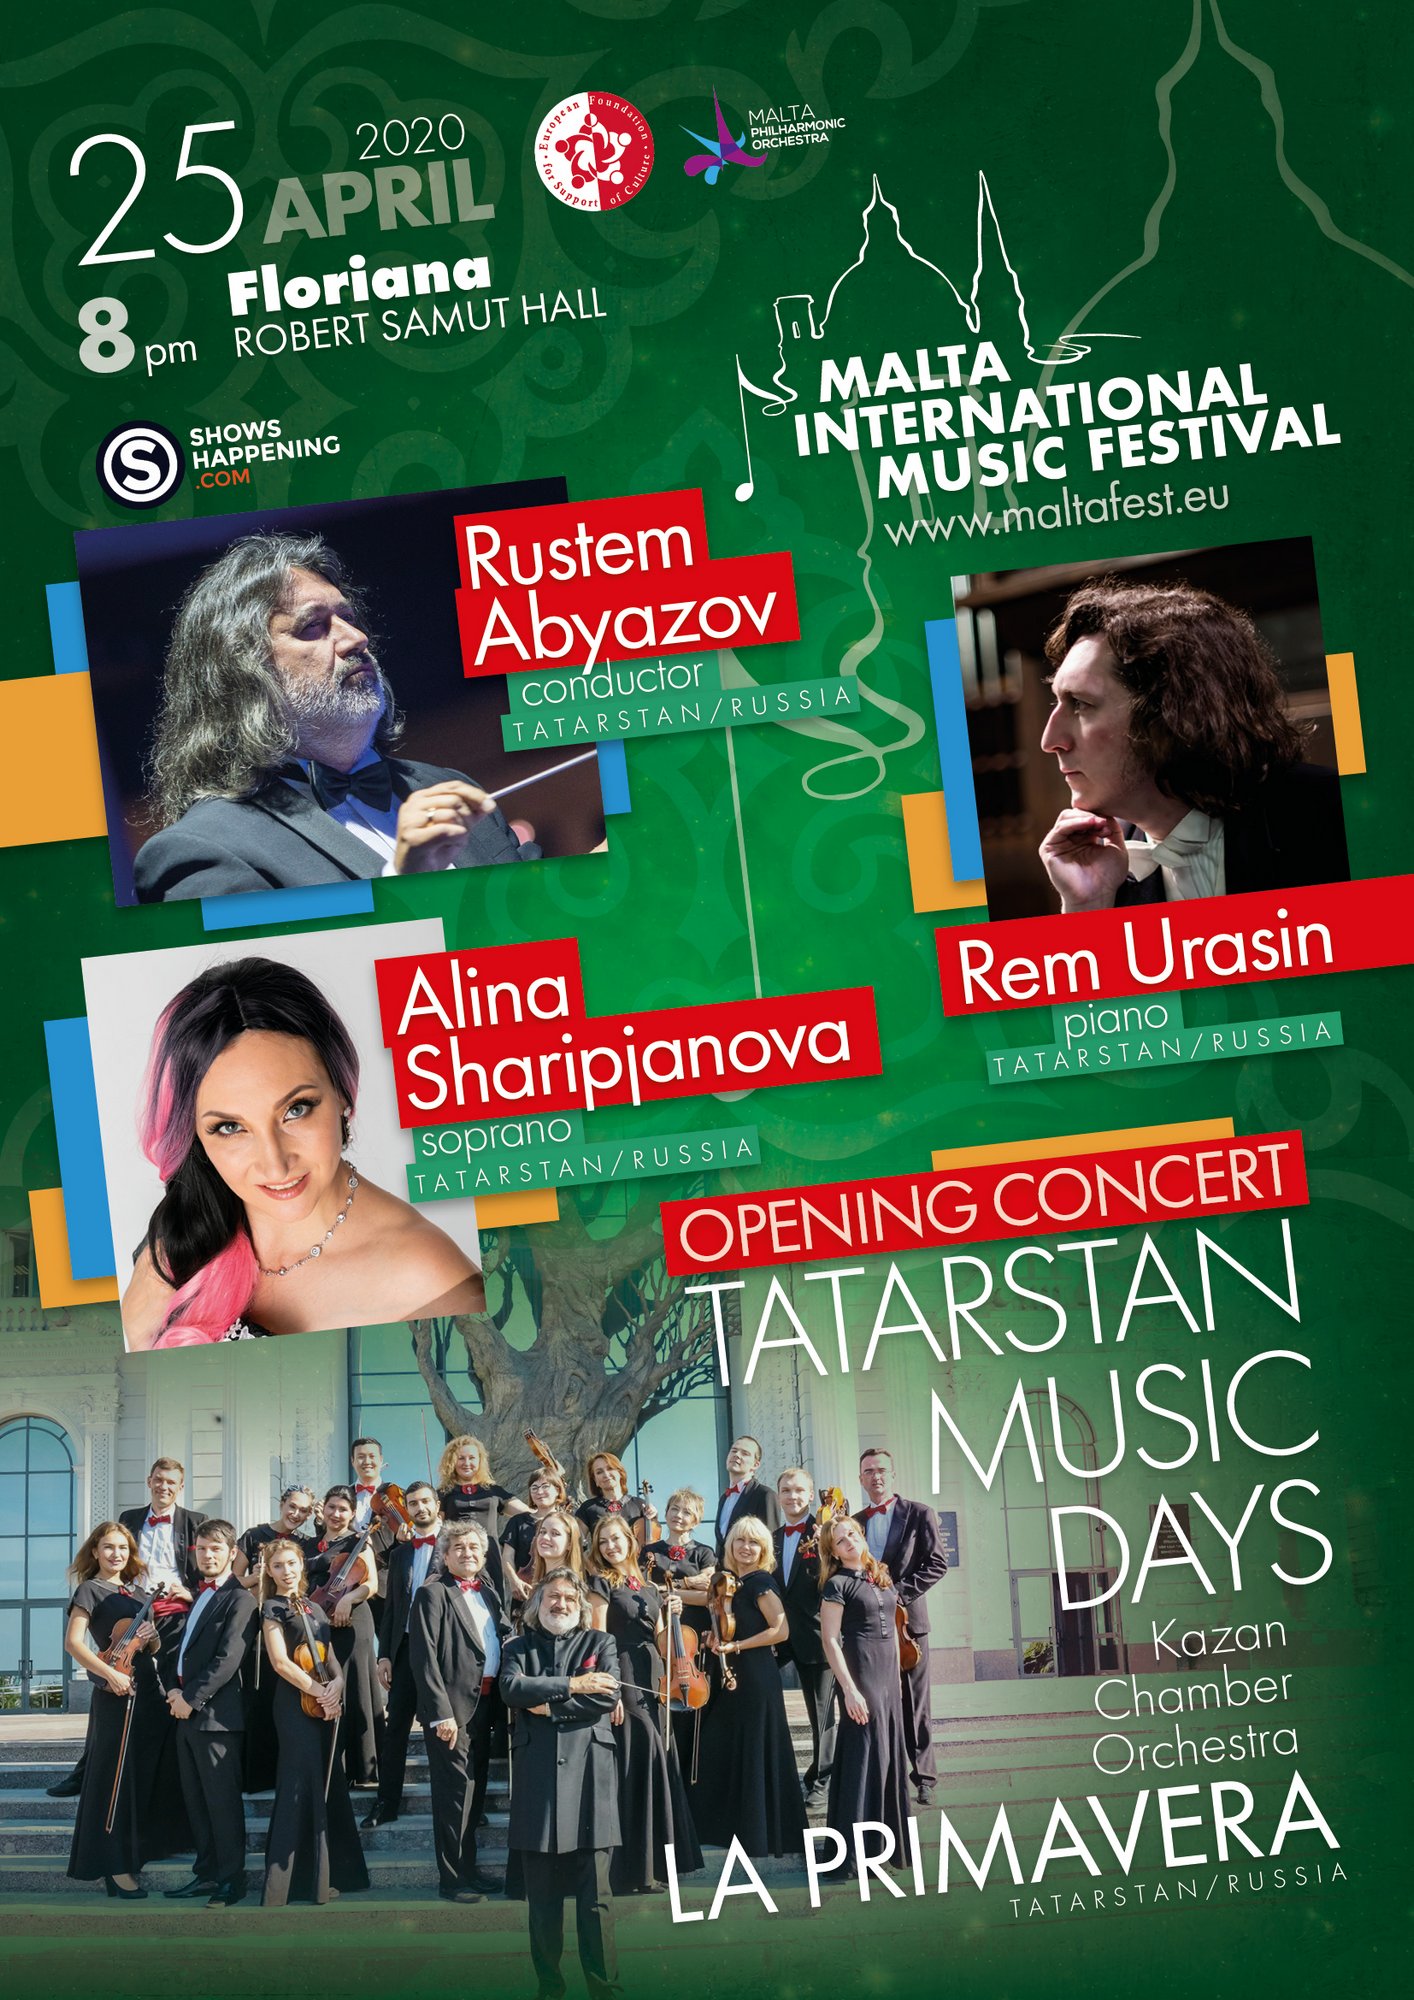 Opening Concert of the Malta International Music Festival, marking the opening concert of Tatarstan Music Days in Malta poster